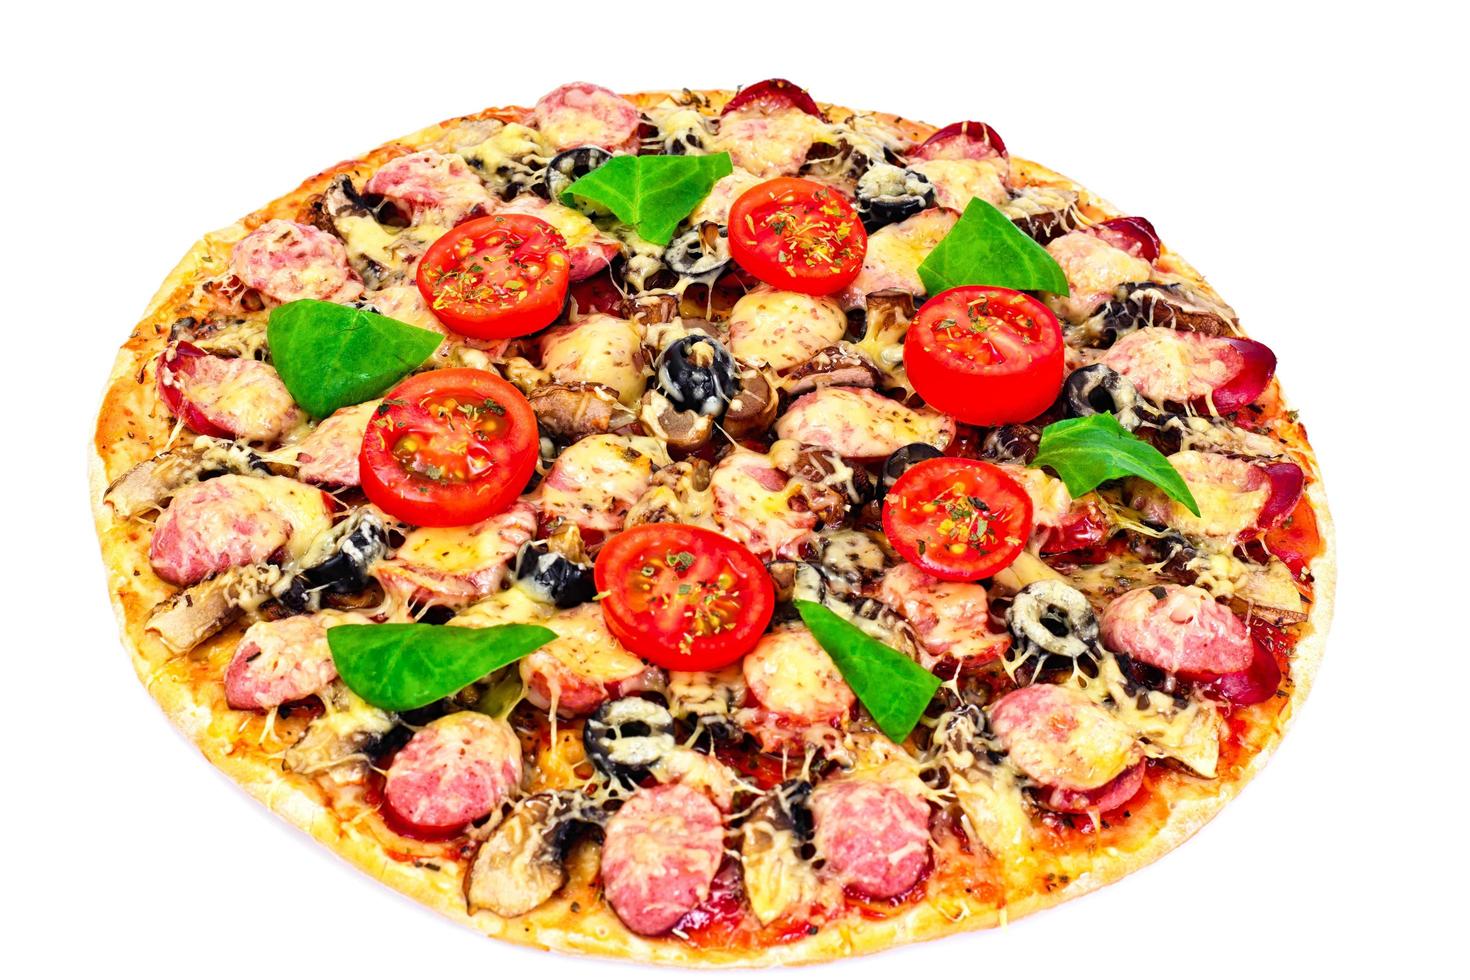 Peperonipizza mit Wurst, Käse, Mozzarella, Oliven und Bas foto